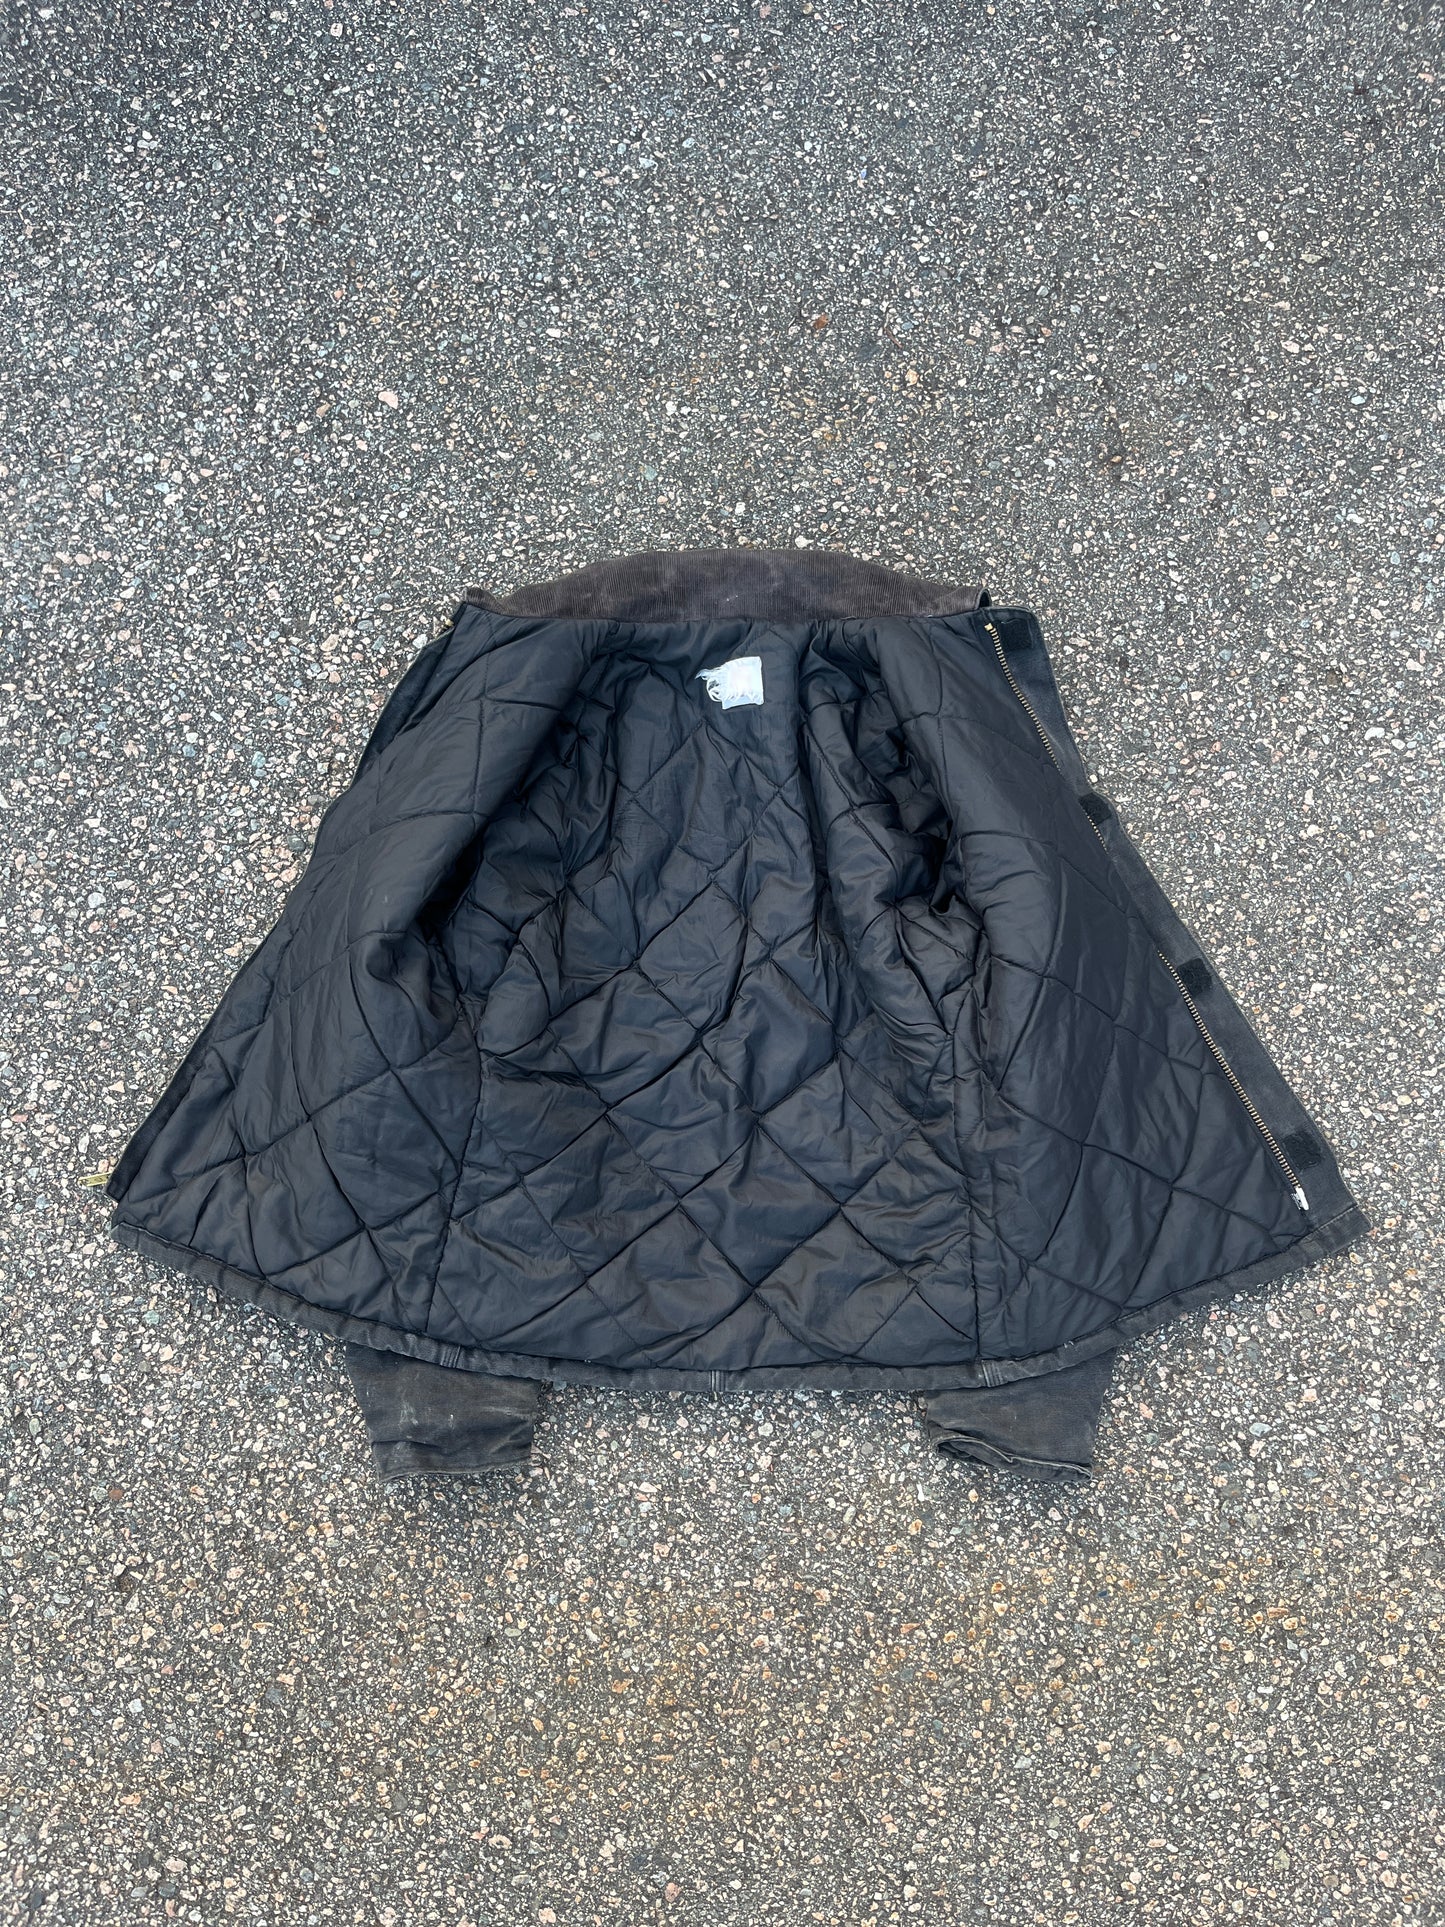 Faded Black Carhartt Arctic Jacket - Medium Tall